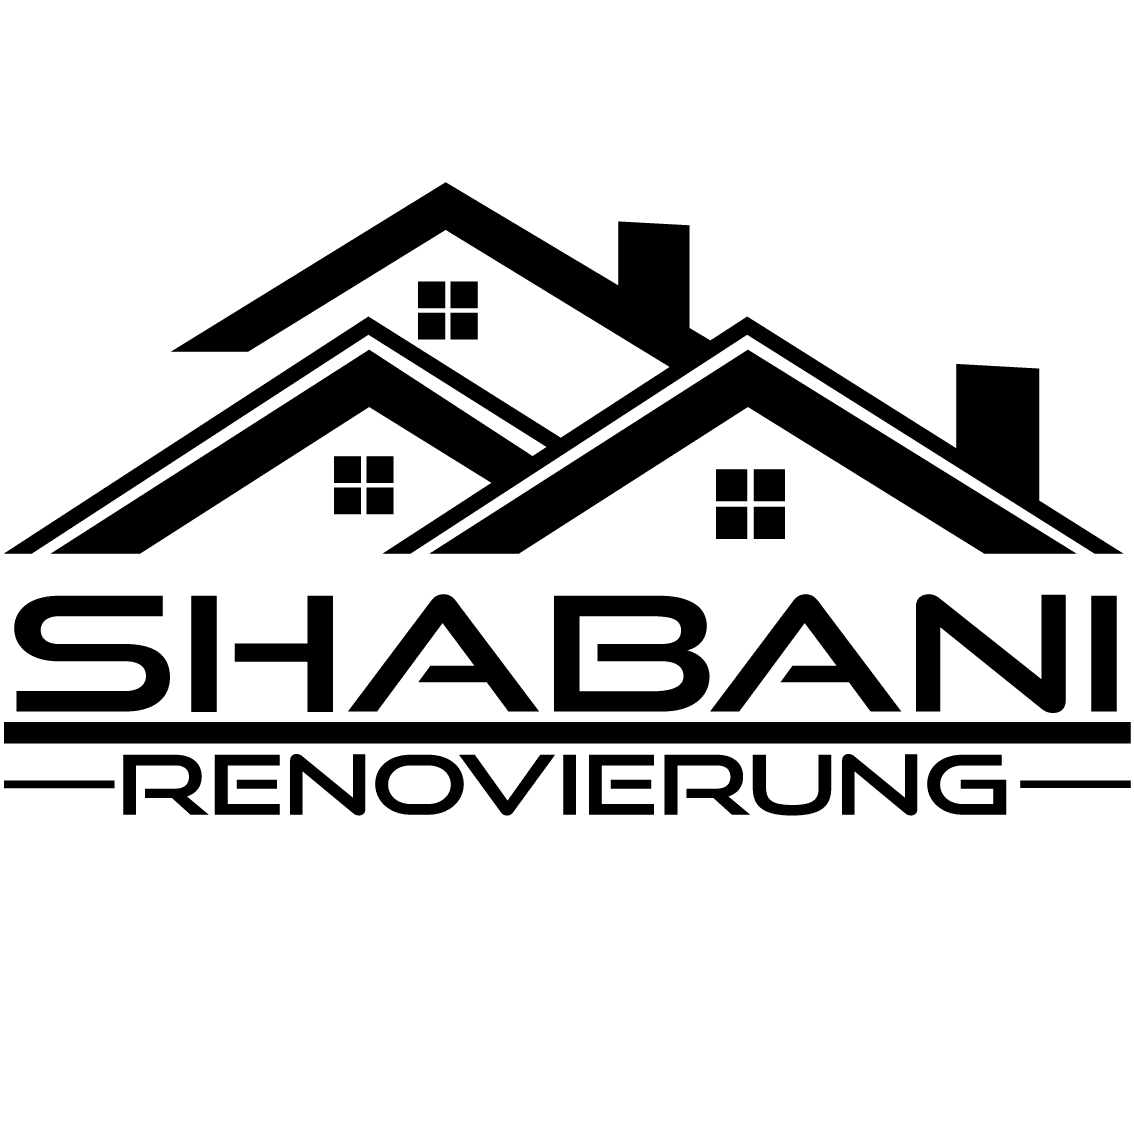 Shabani Renovierung